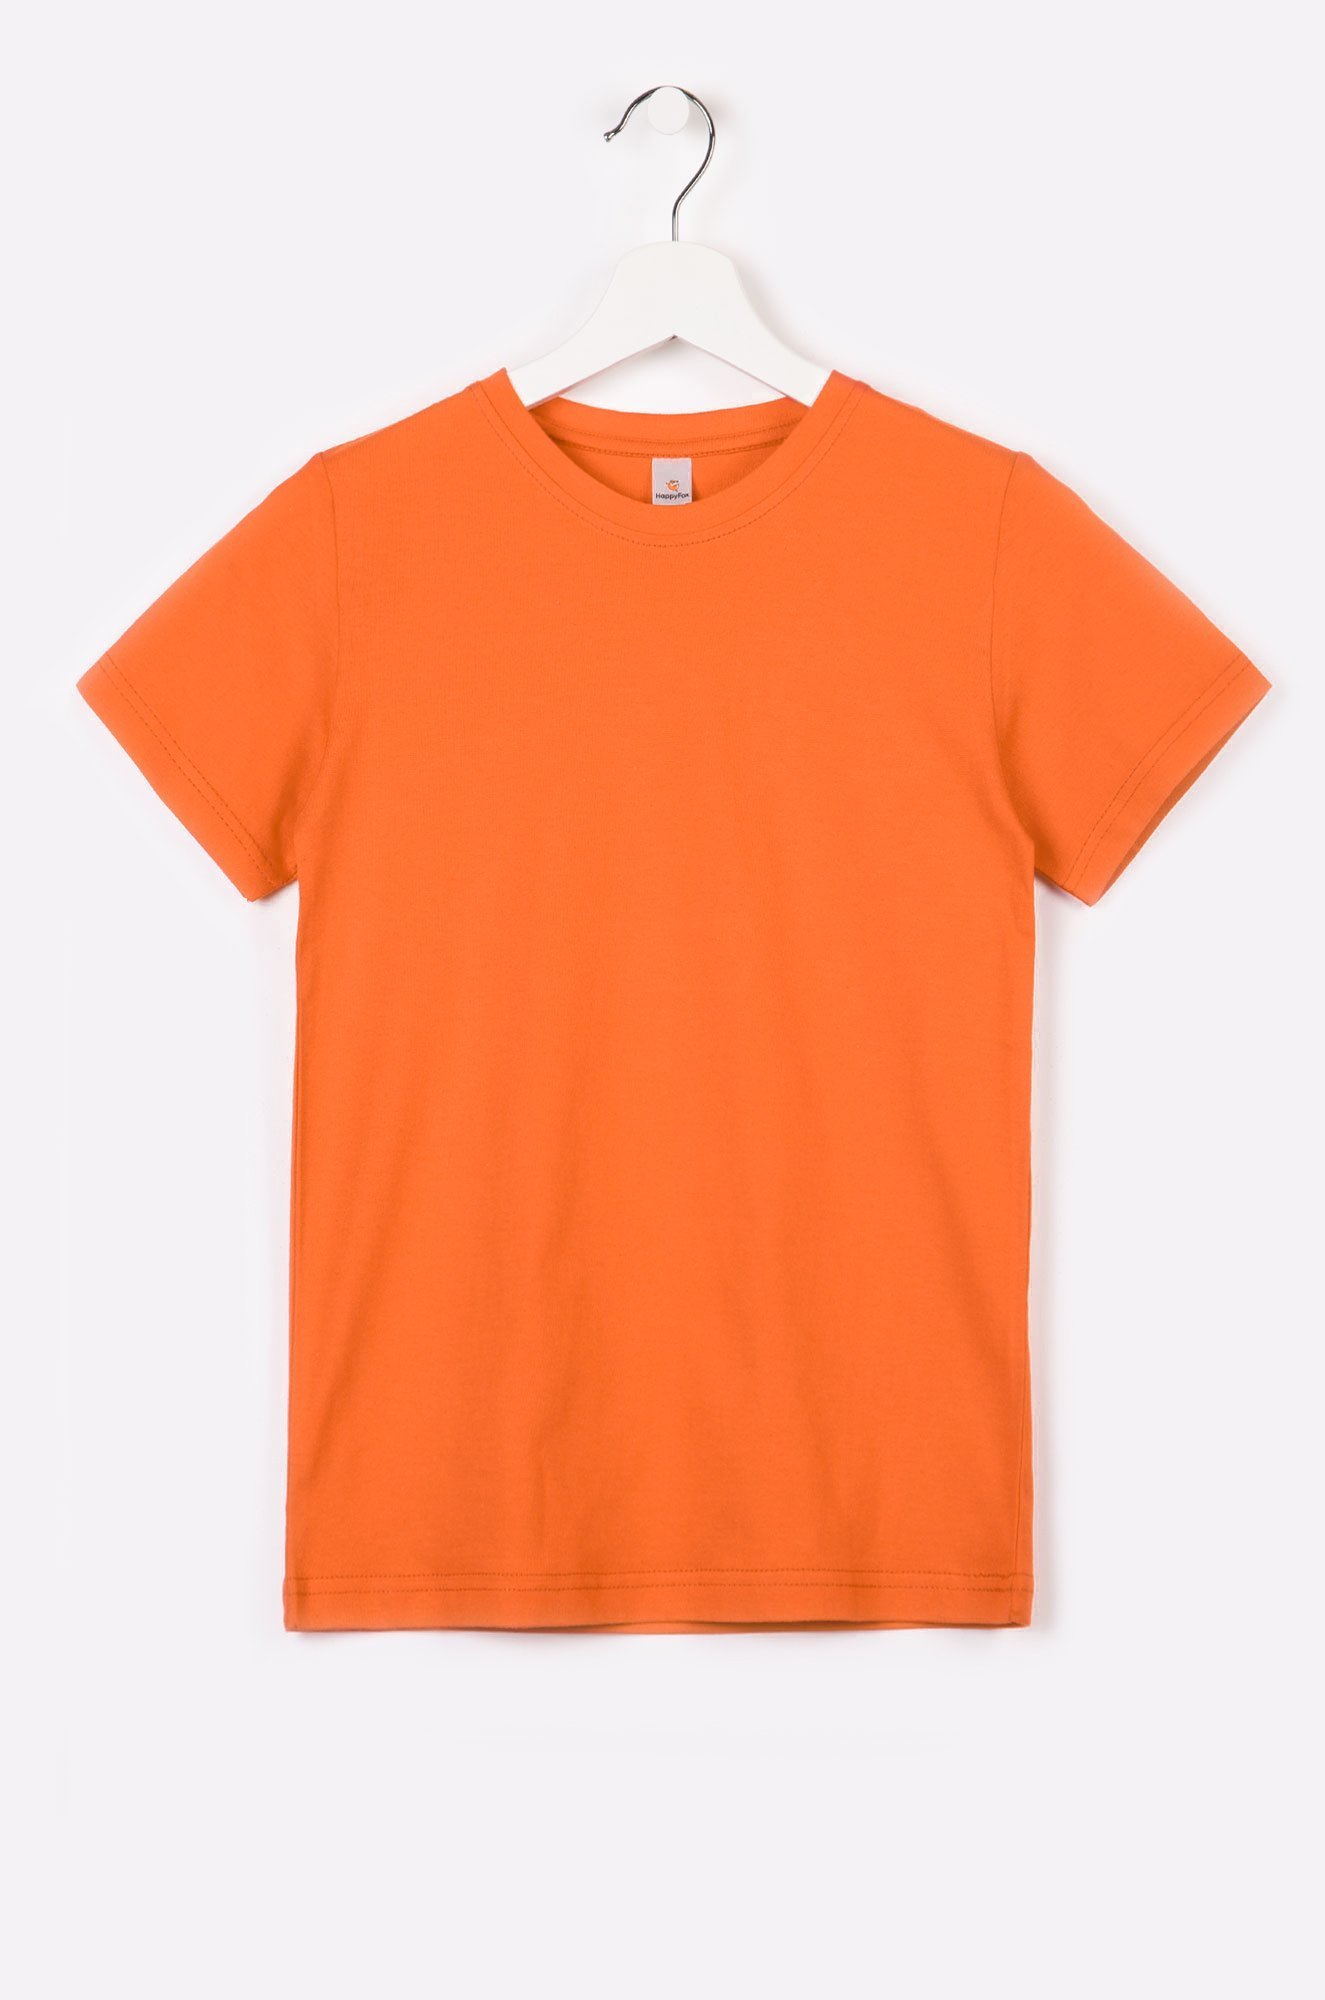 Детская однотонная футболка Happy Fox Артикул: HF5501